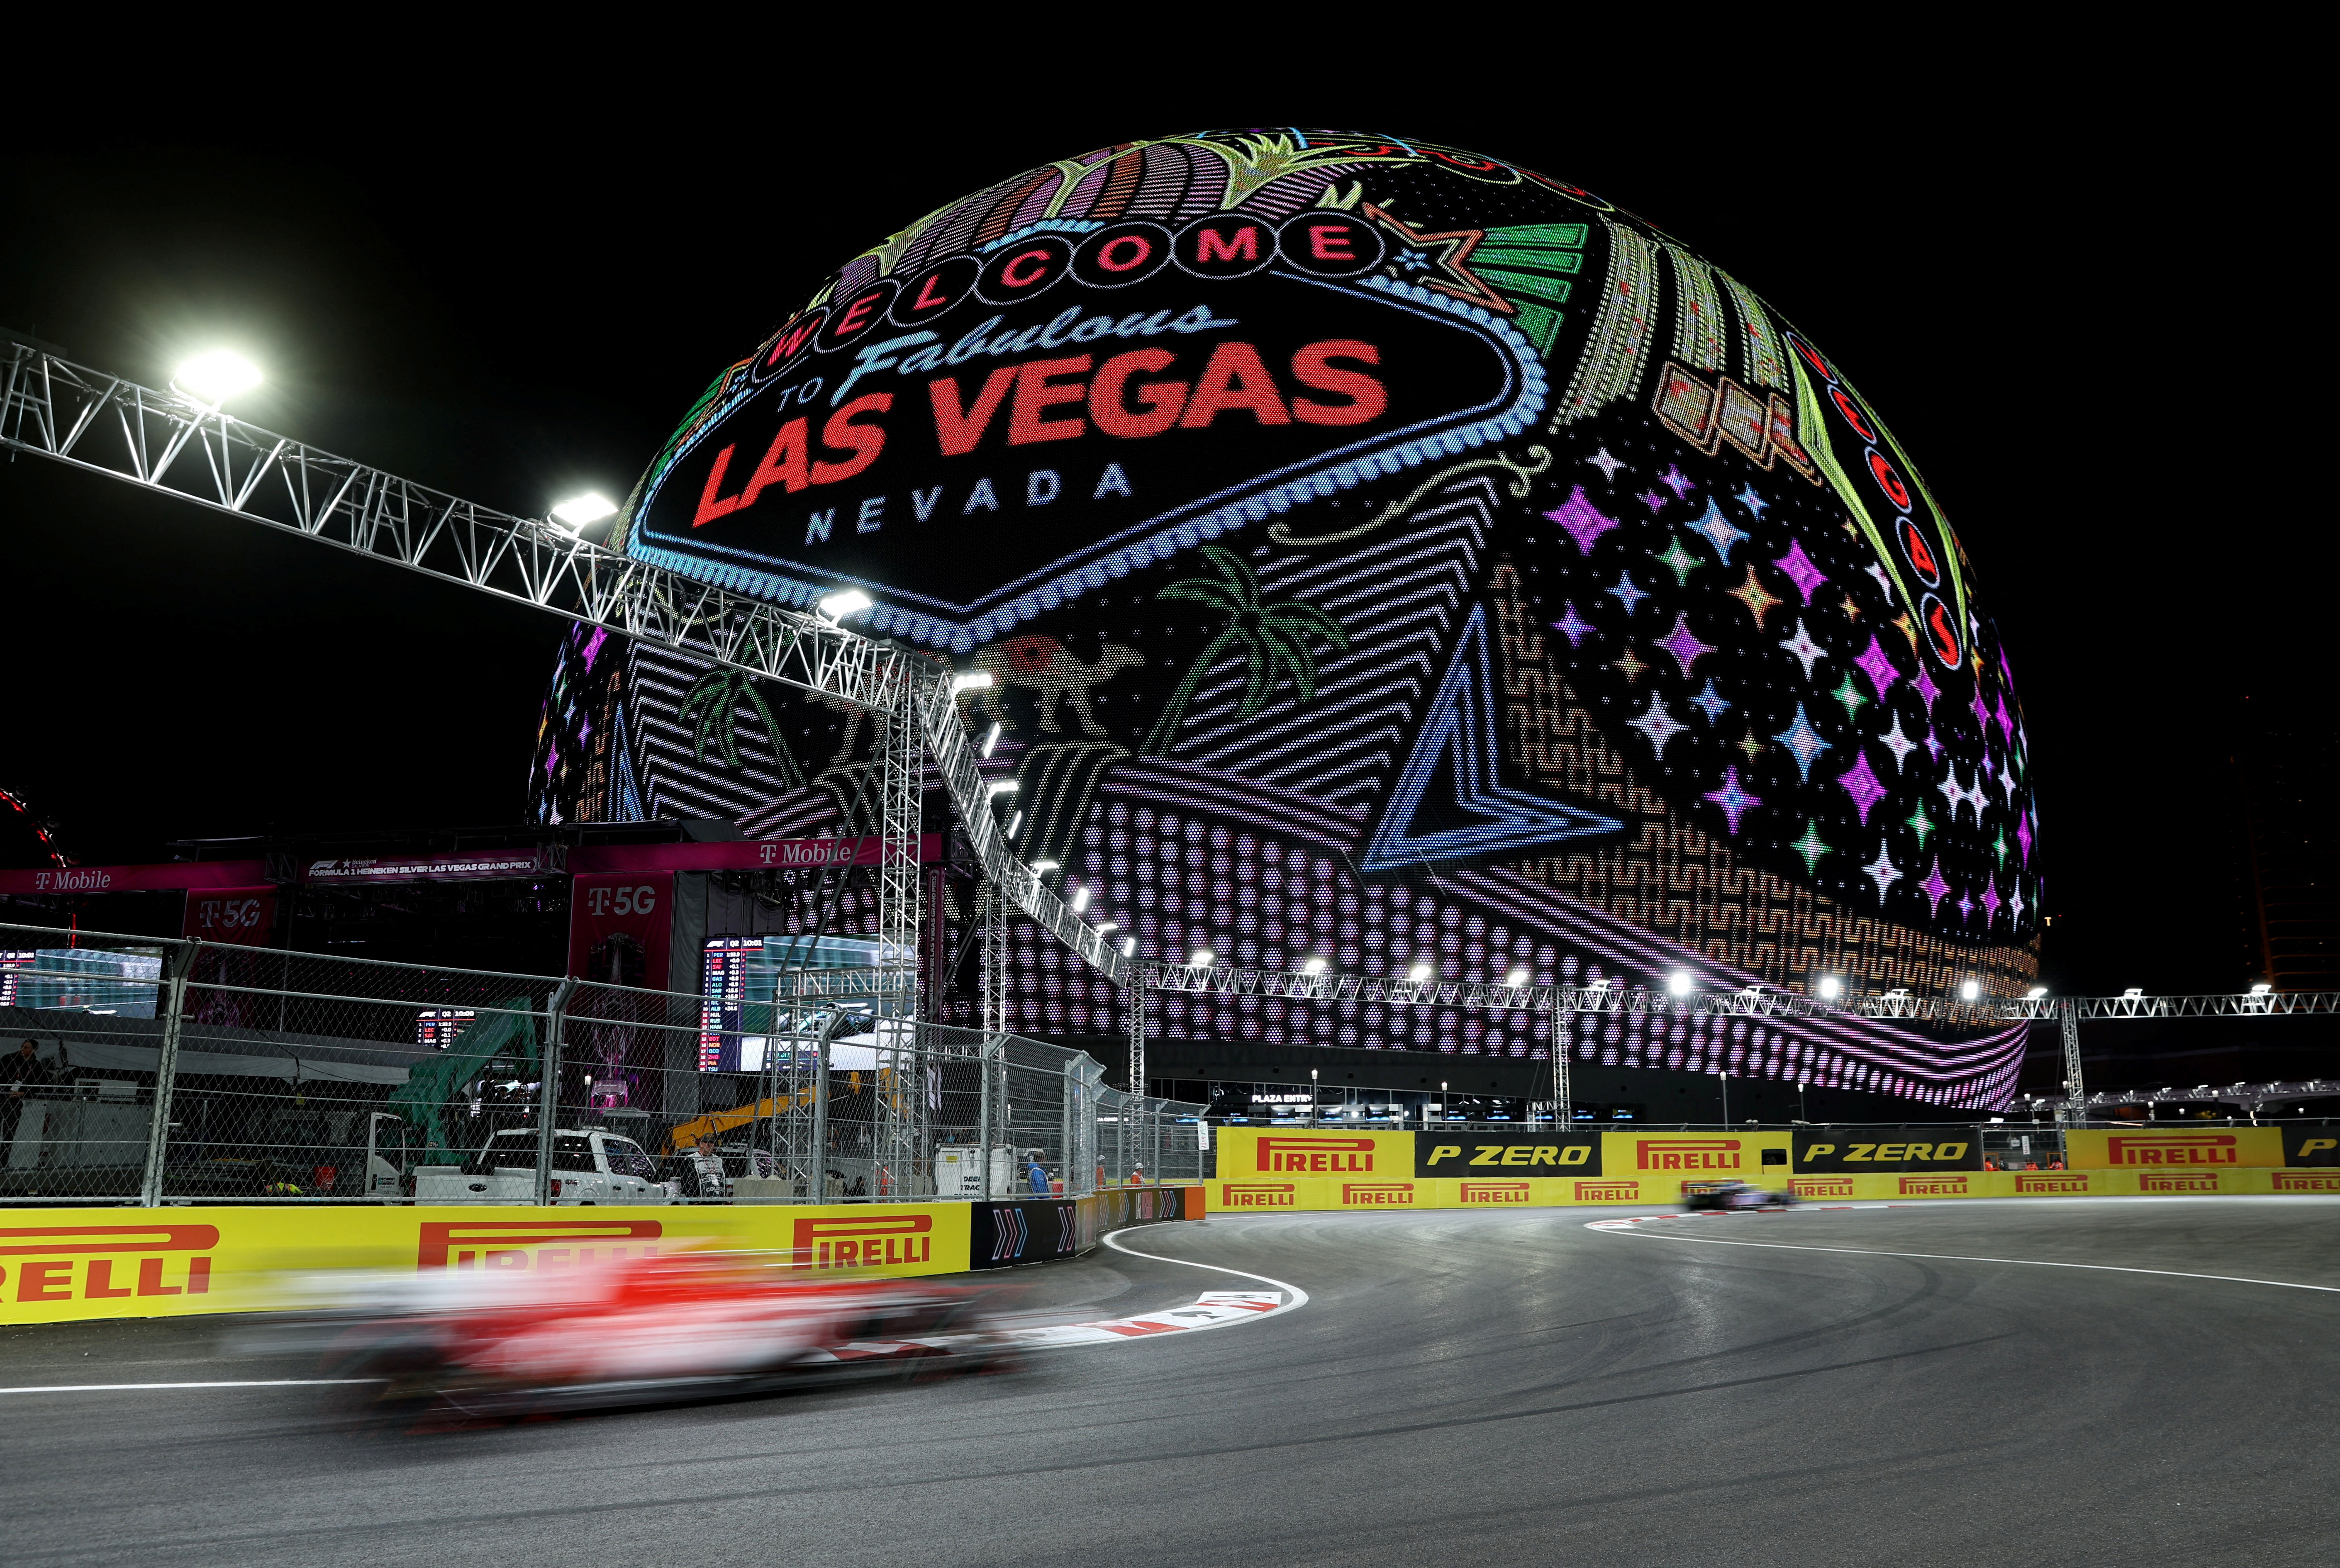 F1 Las Vegas Grand Prix off to a rocky start following water valve